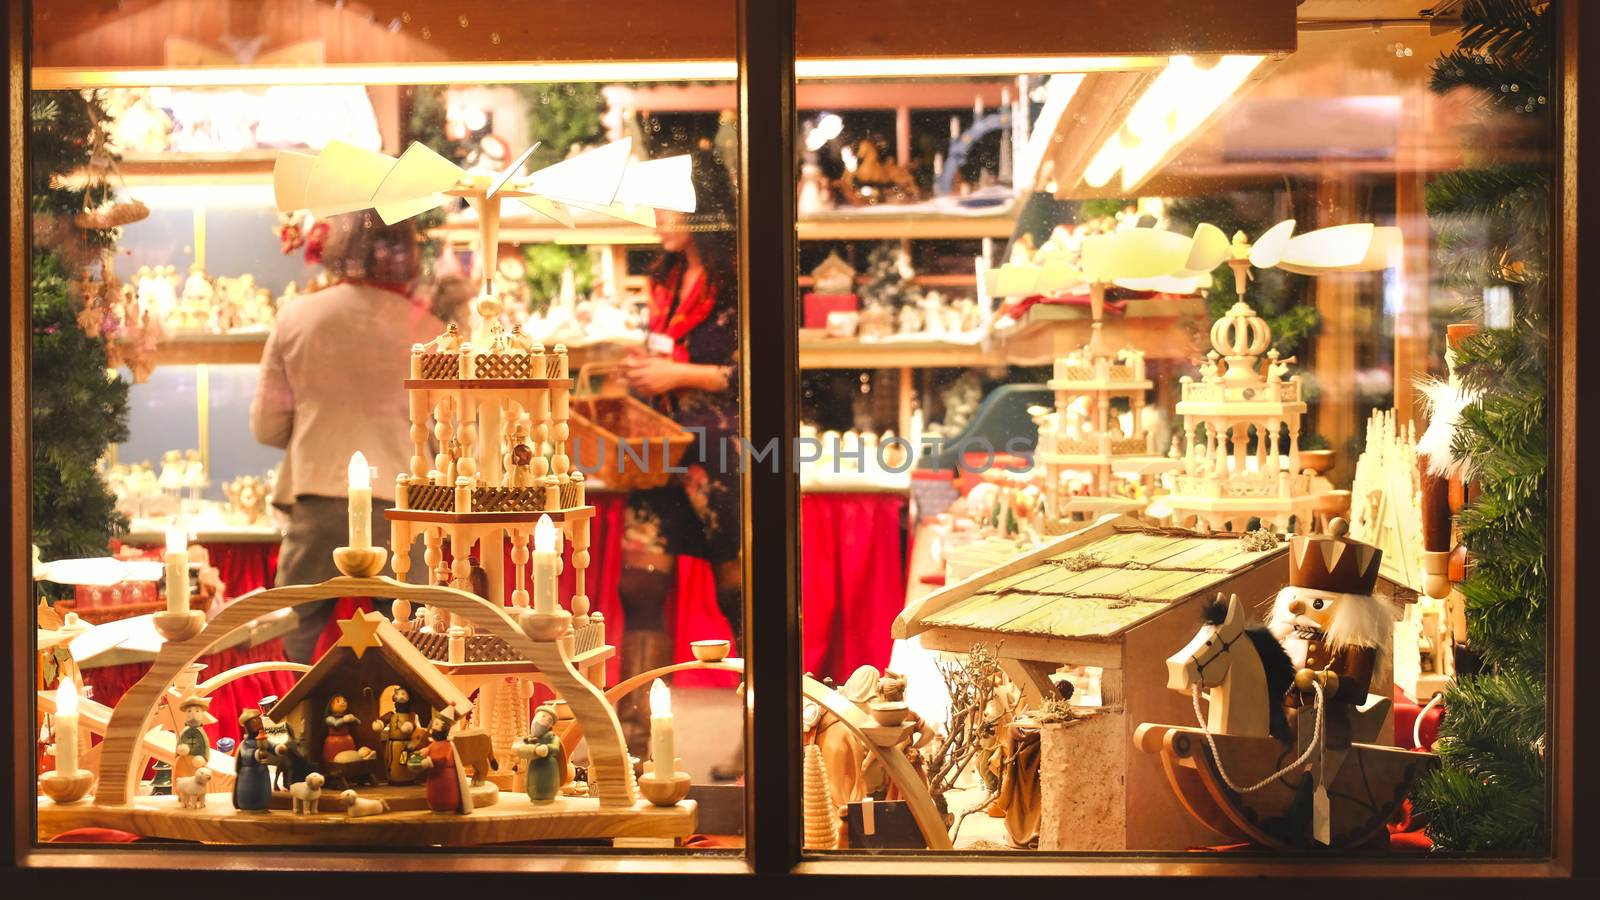 wintage toy store window shop christmas market background by LucaLorenzelli